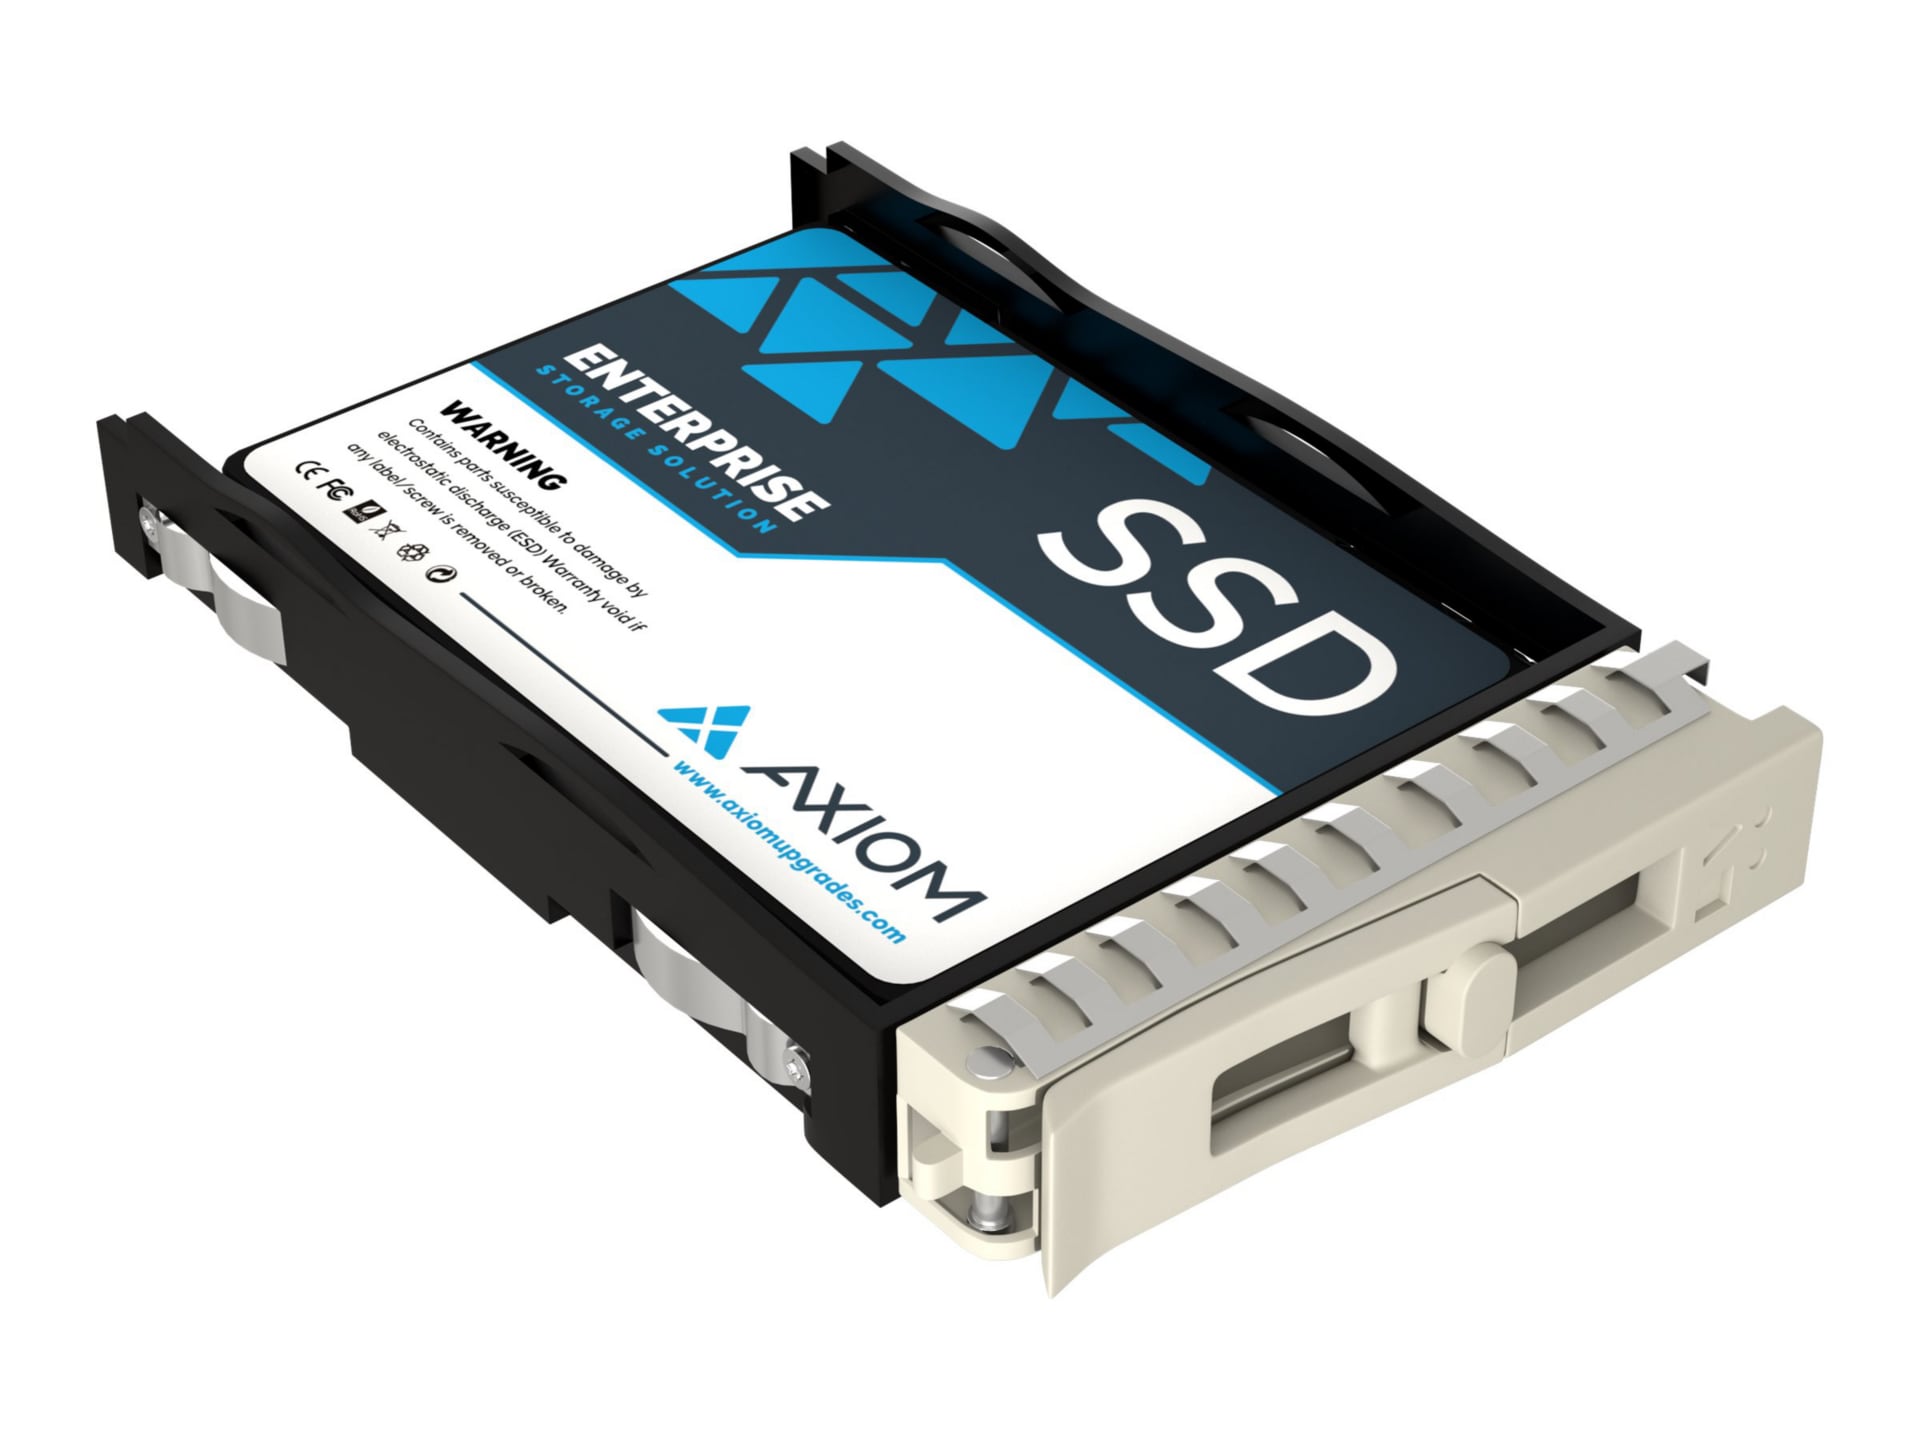 Axiom Enterprise Pro EP450 - SSD - 960 Go - SAS 12Gb/s